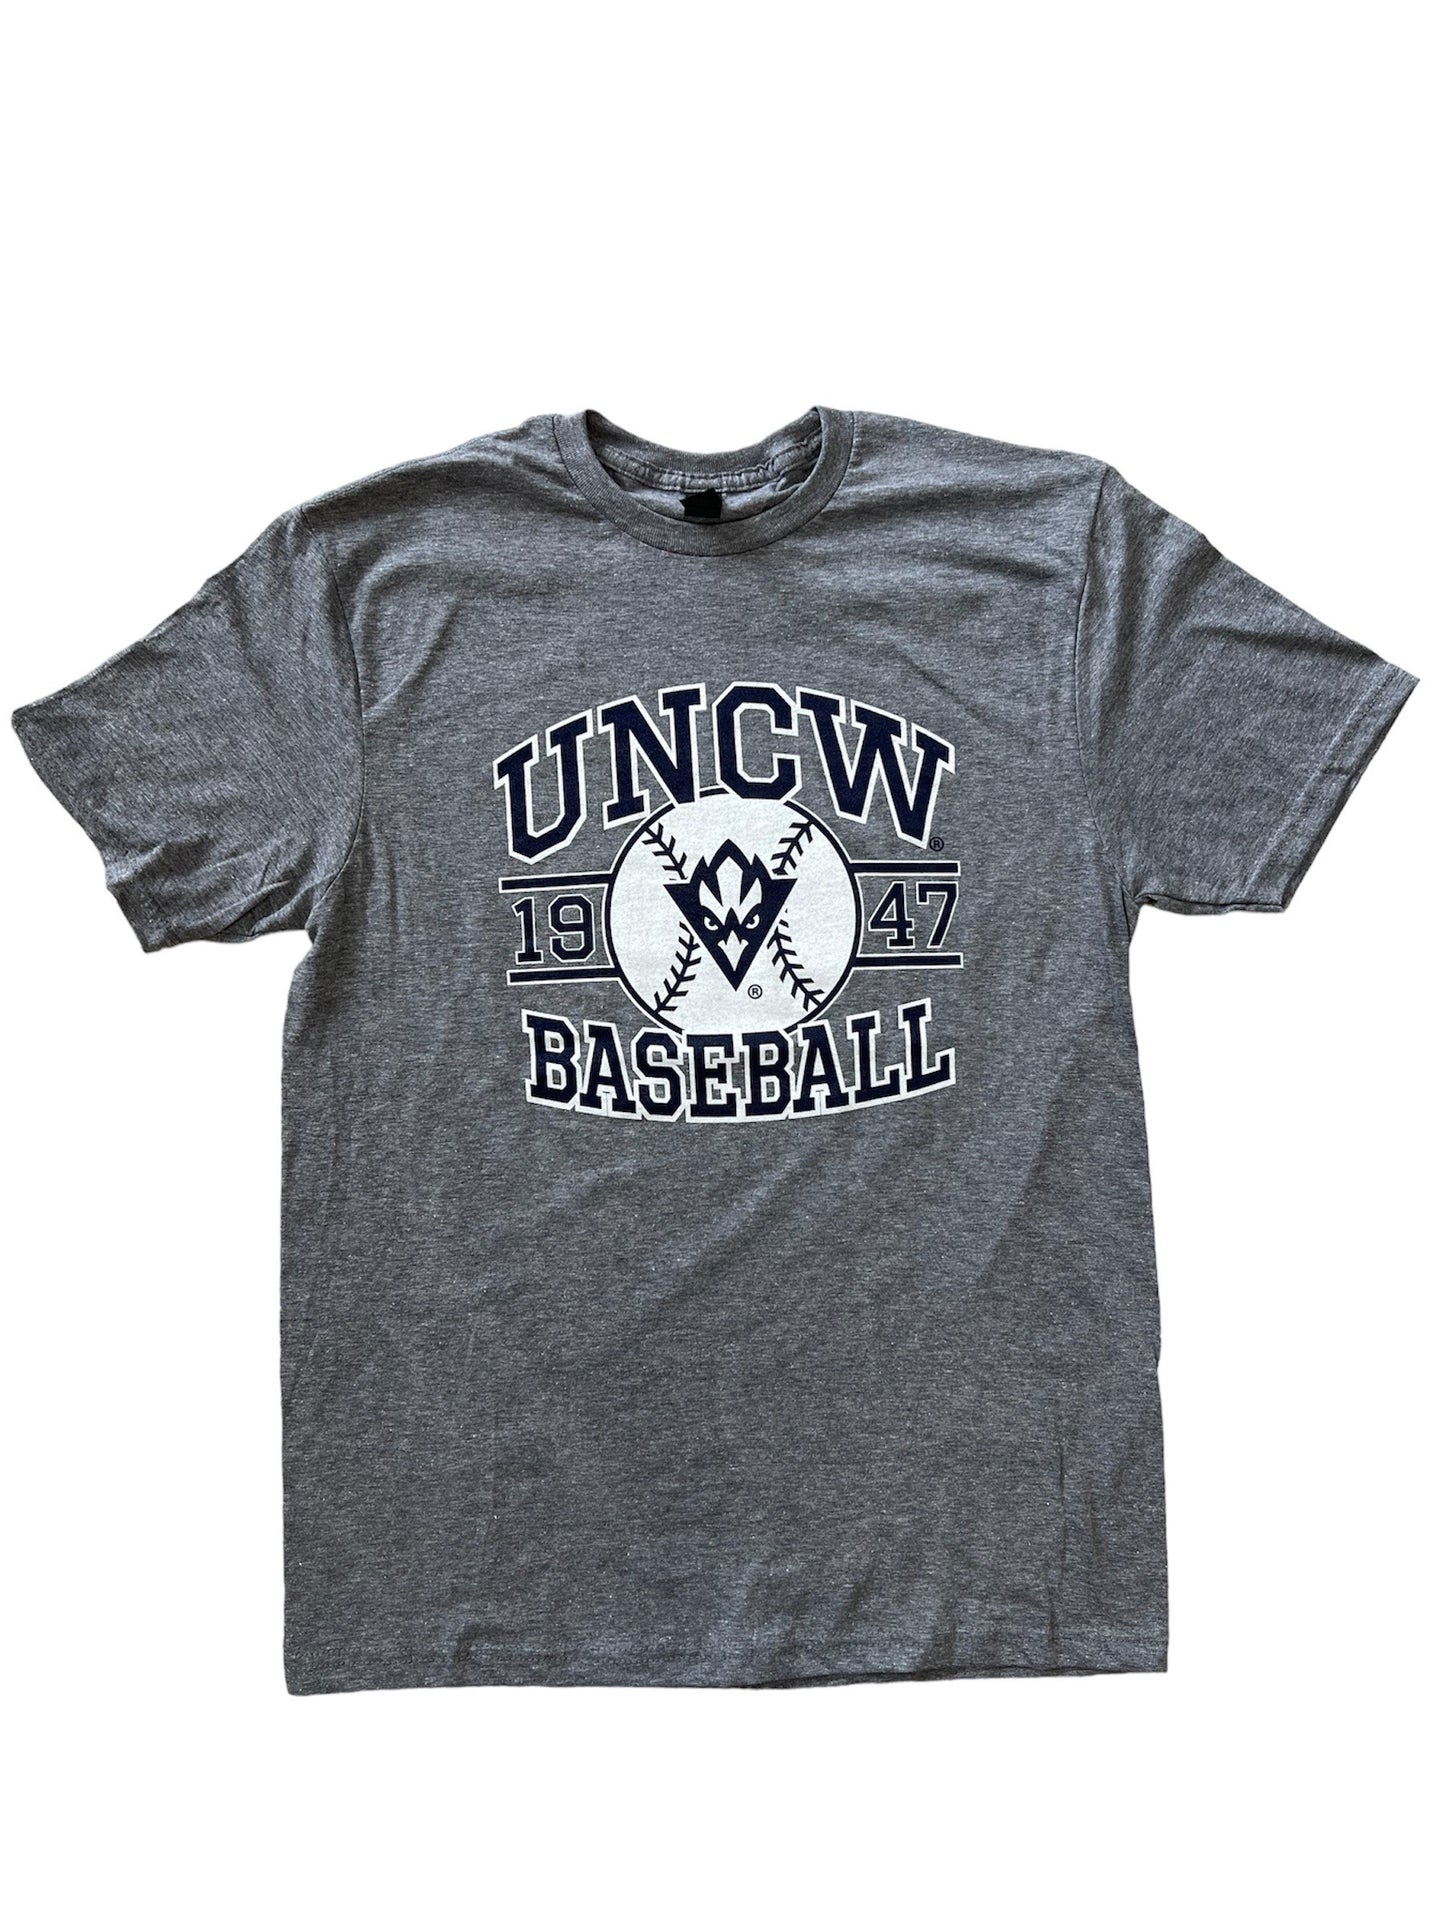 UNCW Baseball  - T Shirt - Grey